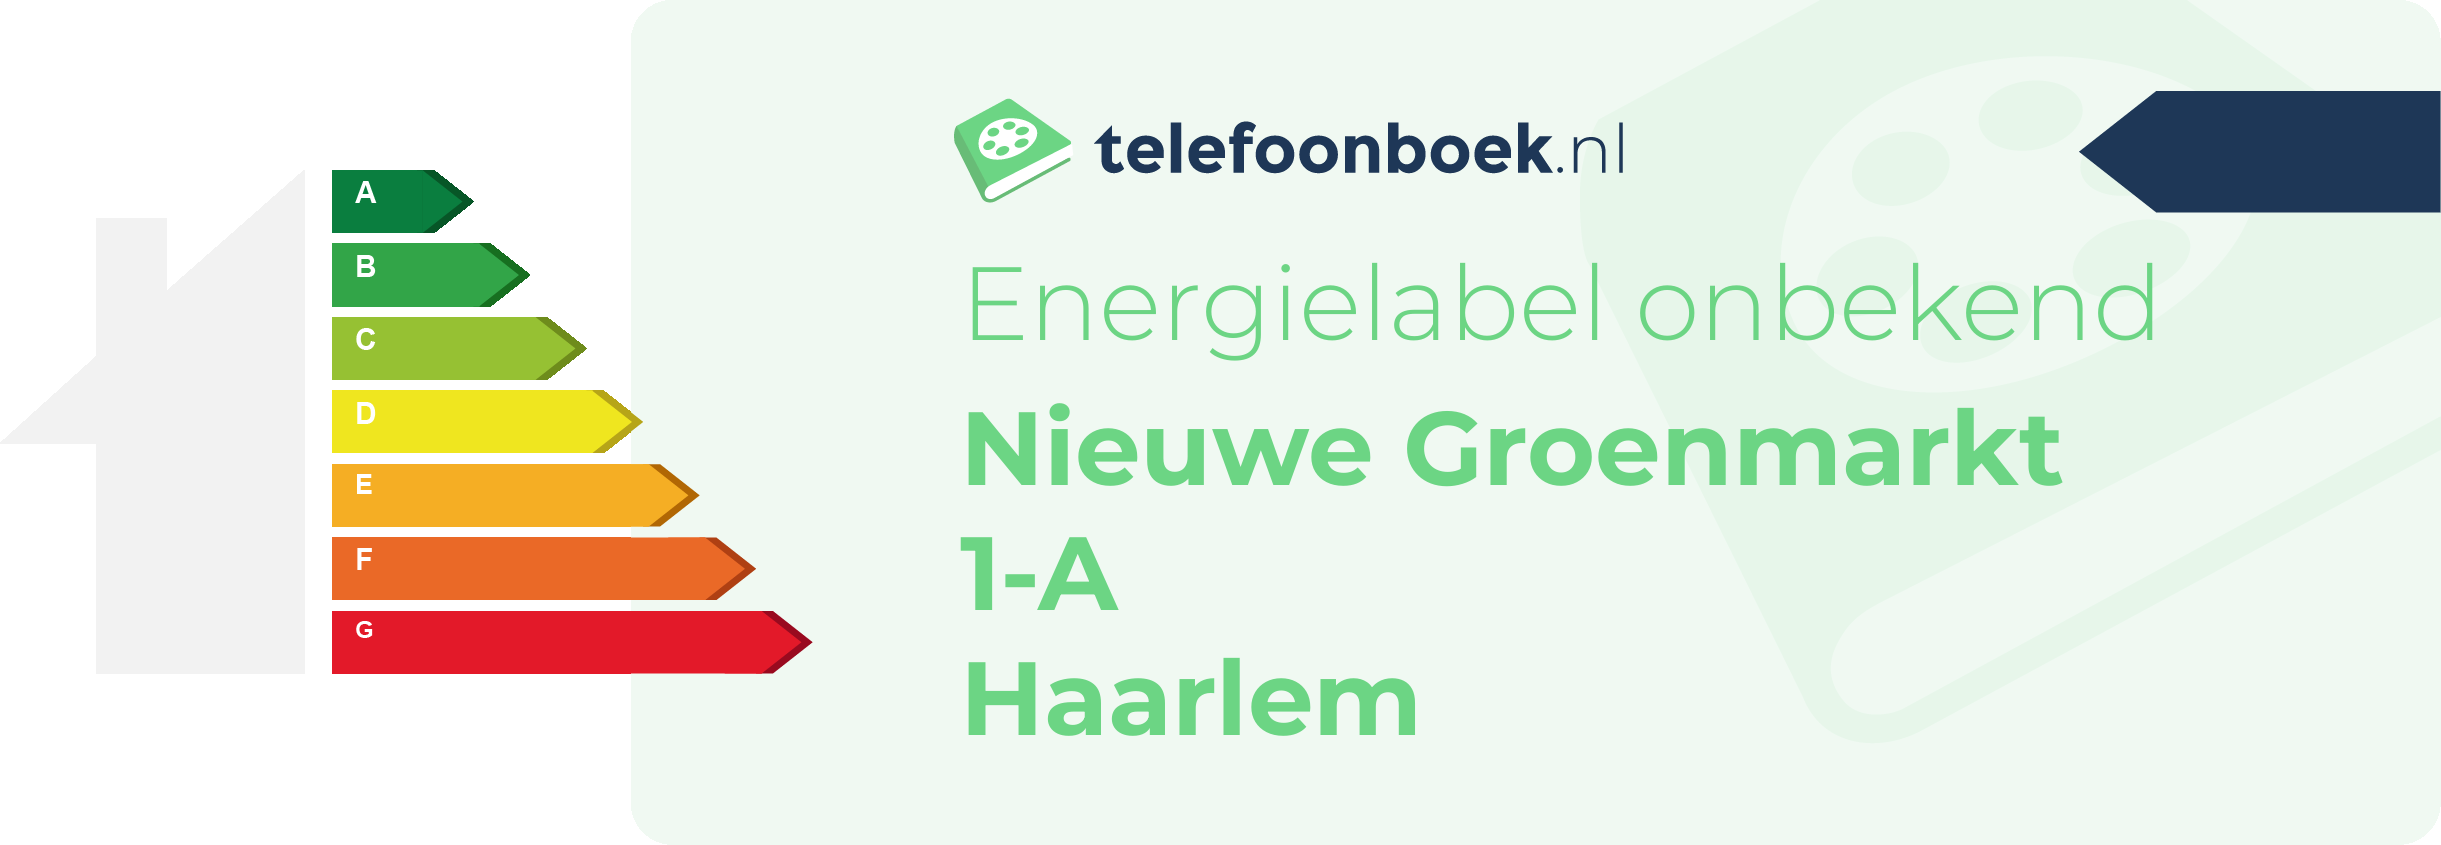 Energielabel Nieuwe Groenmarkt 1-A Haarlem